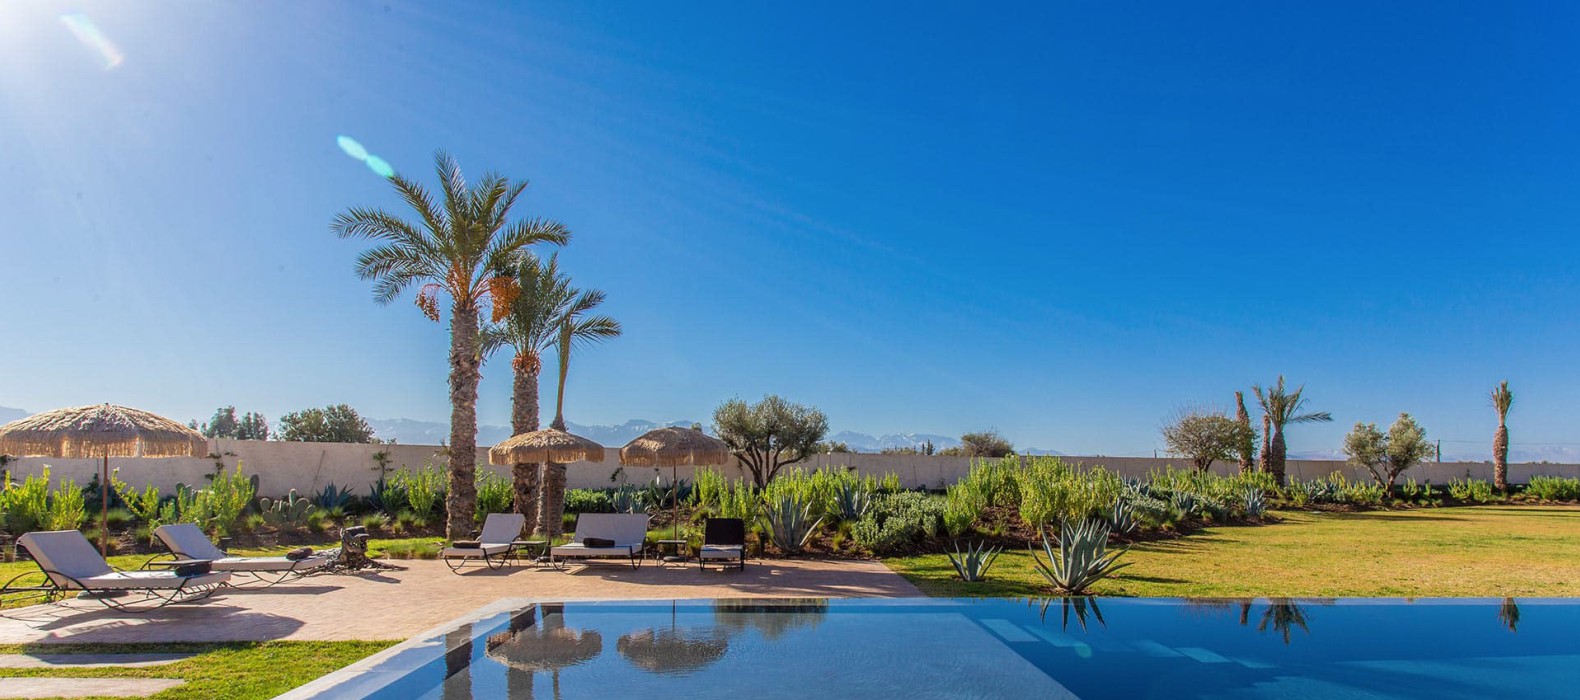 Pool area view of Villa Yasmina in Marrakech